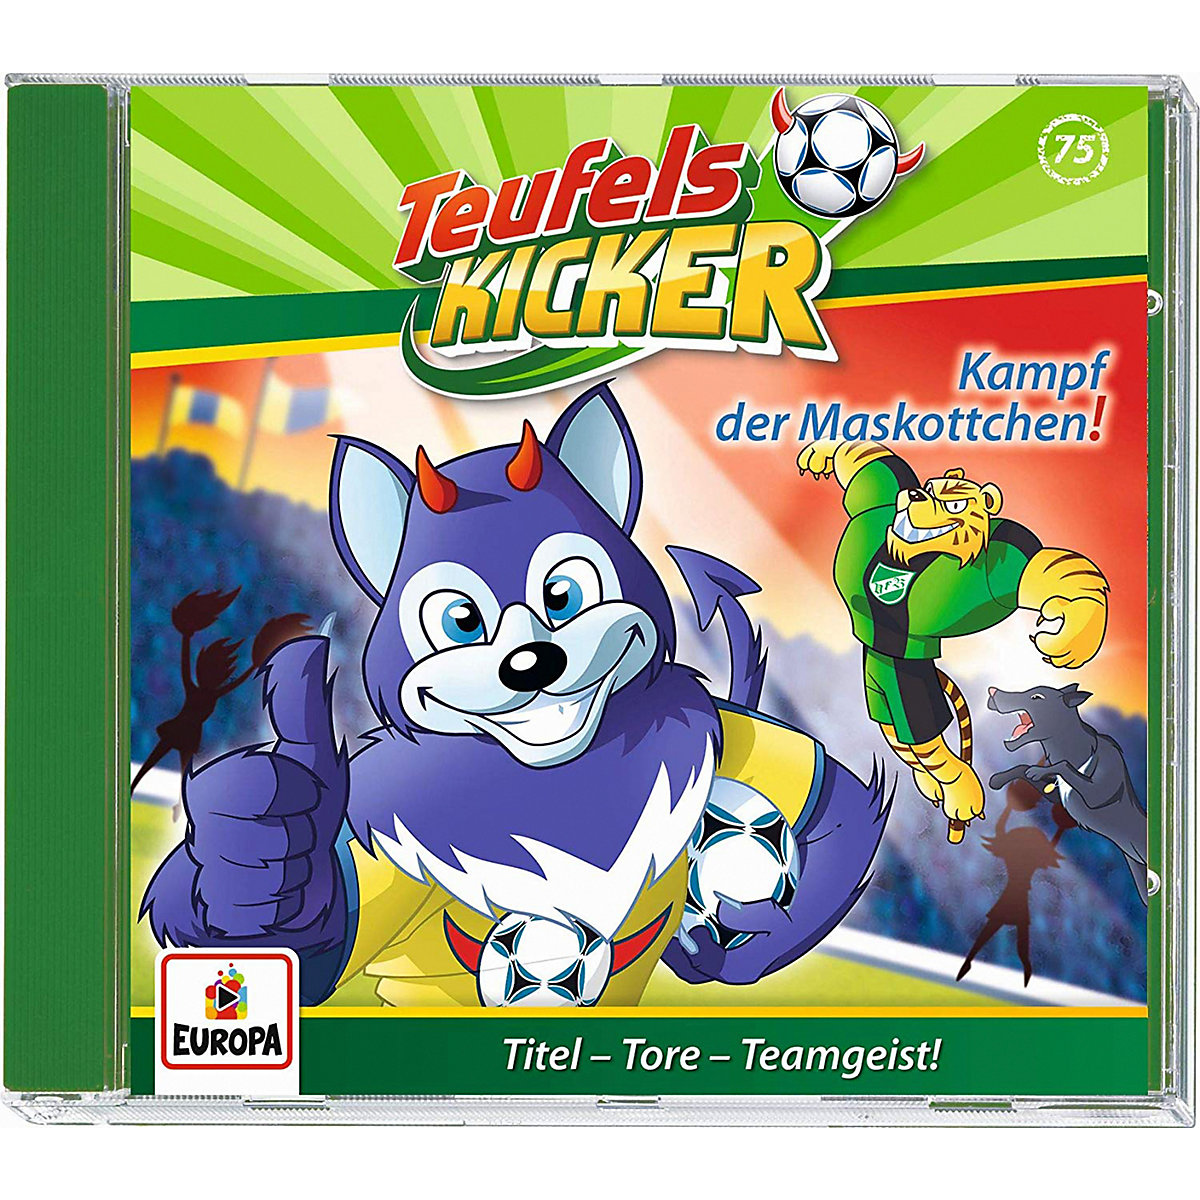 CD Teufelskicker 75 Kampf der Maskottchen!